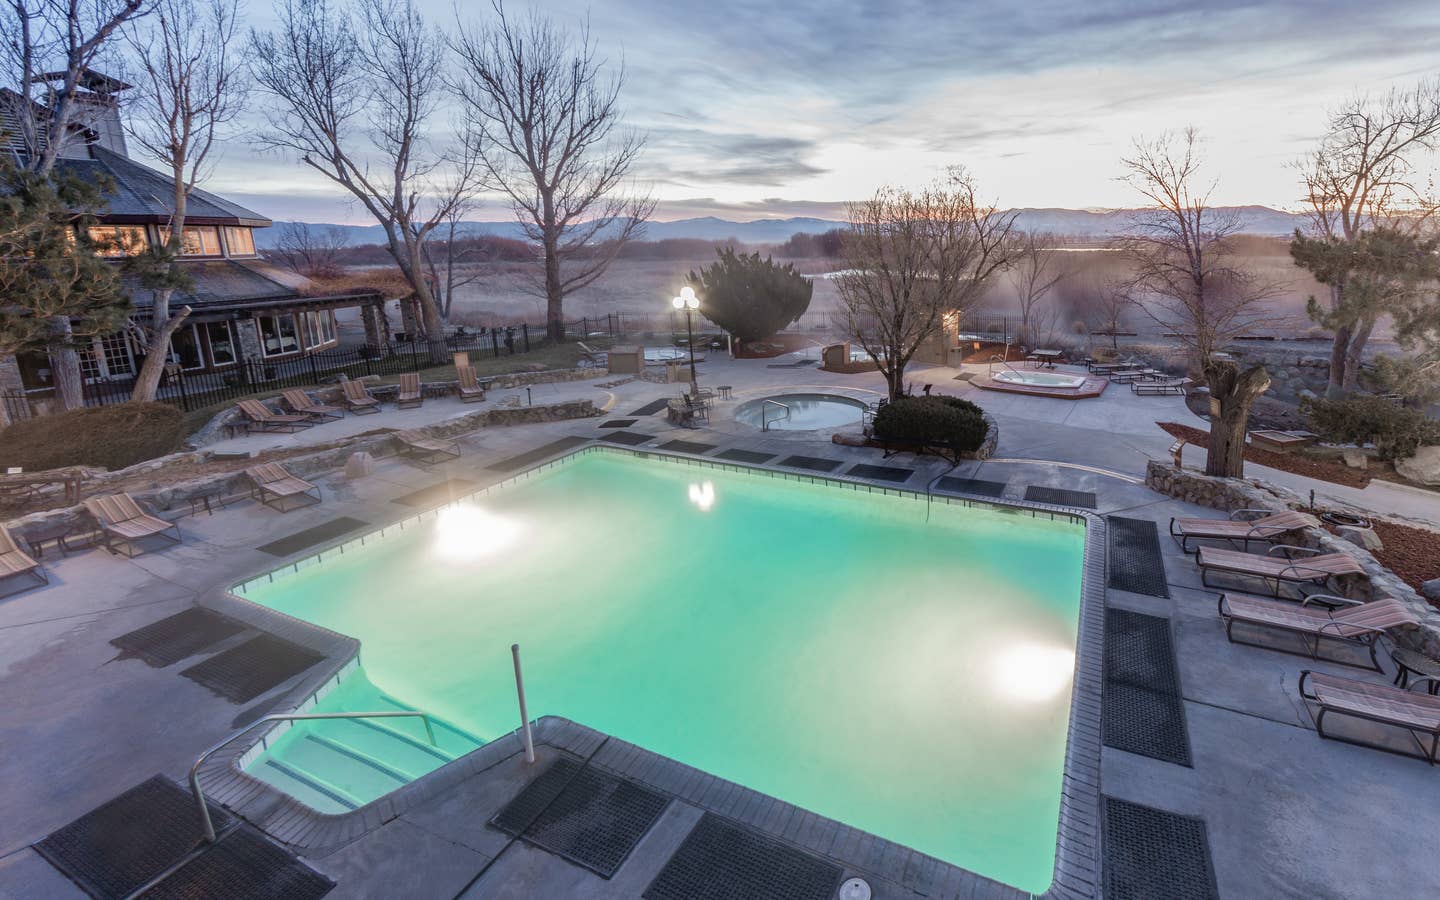 Hot Springs outdoor pool at David Walley's Resort in Genoa, Nevada